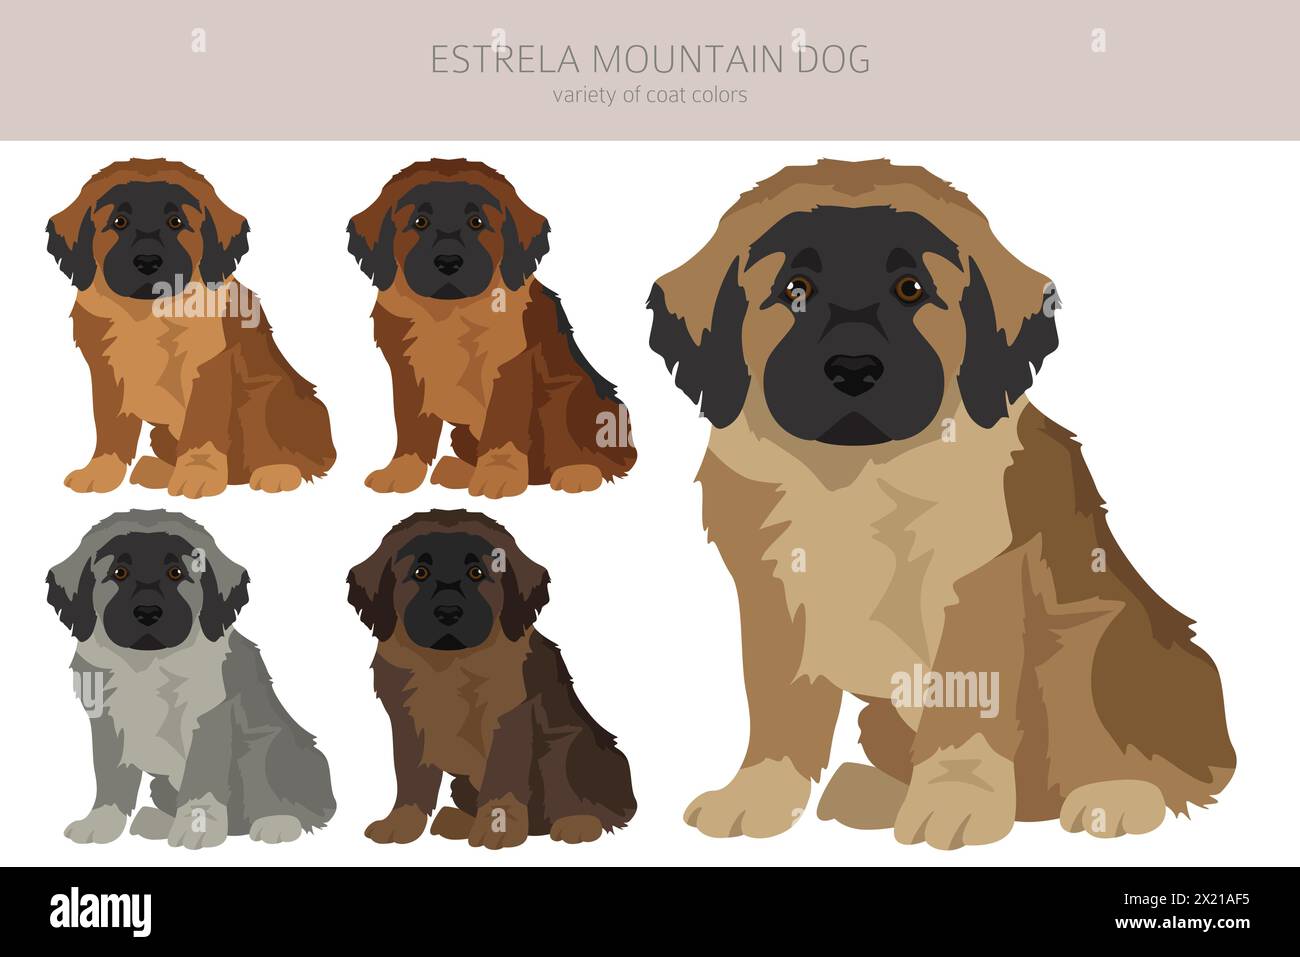 Estrela mountain dog puppy clipart. Different poses, coat colors set.  Vector illustration Stock Vector